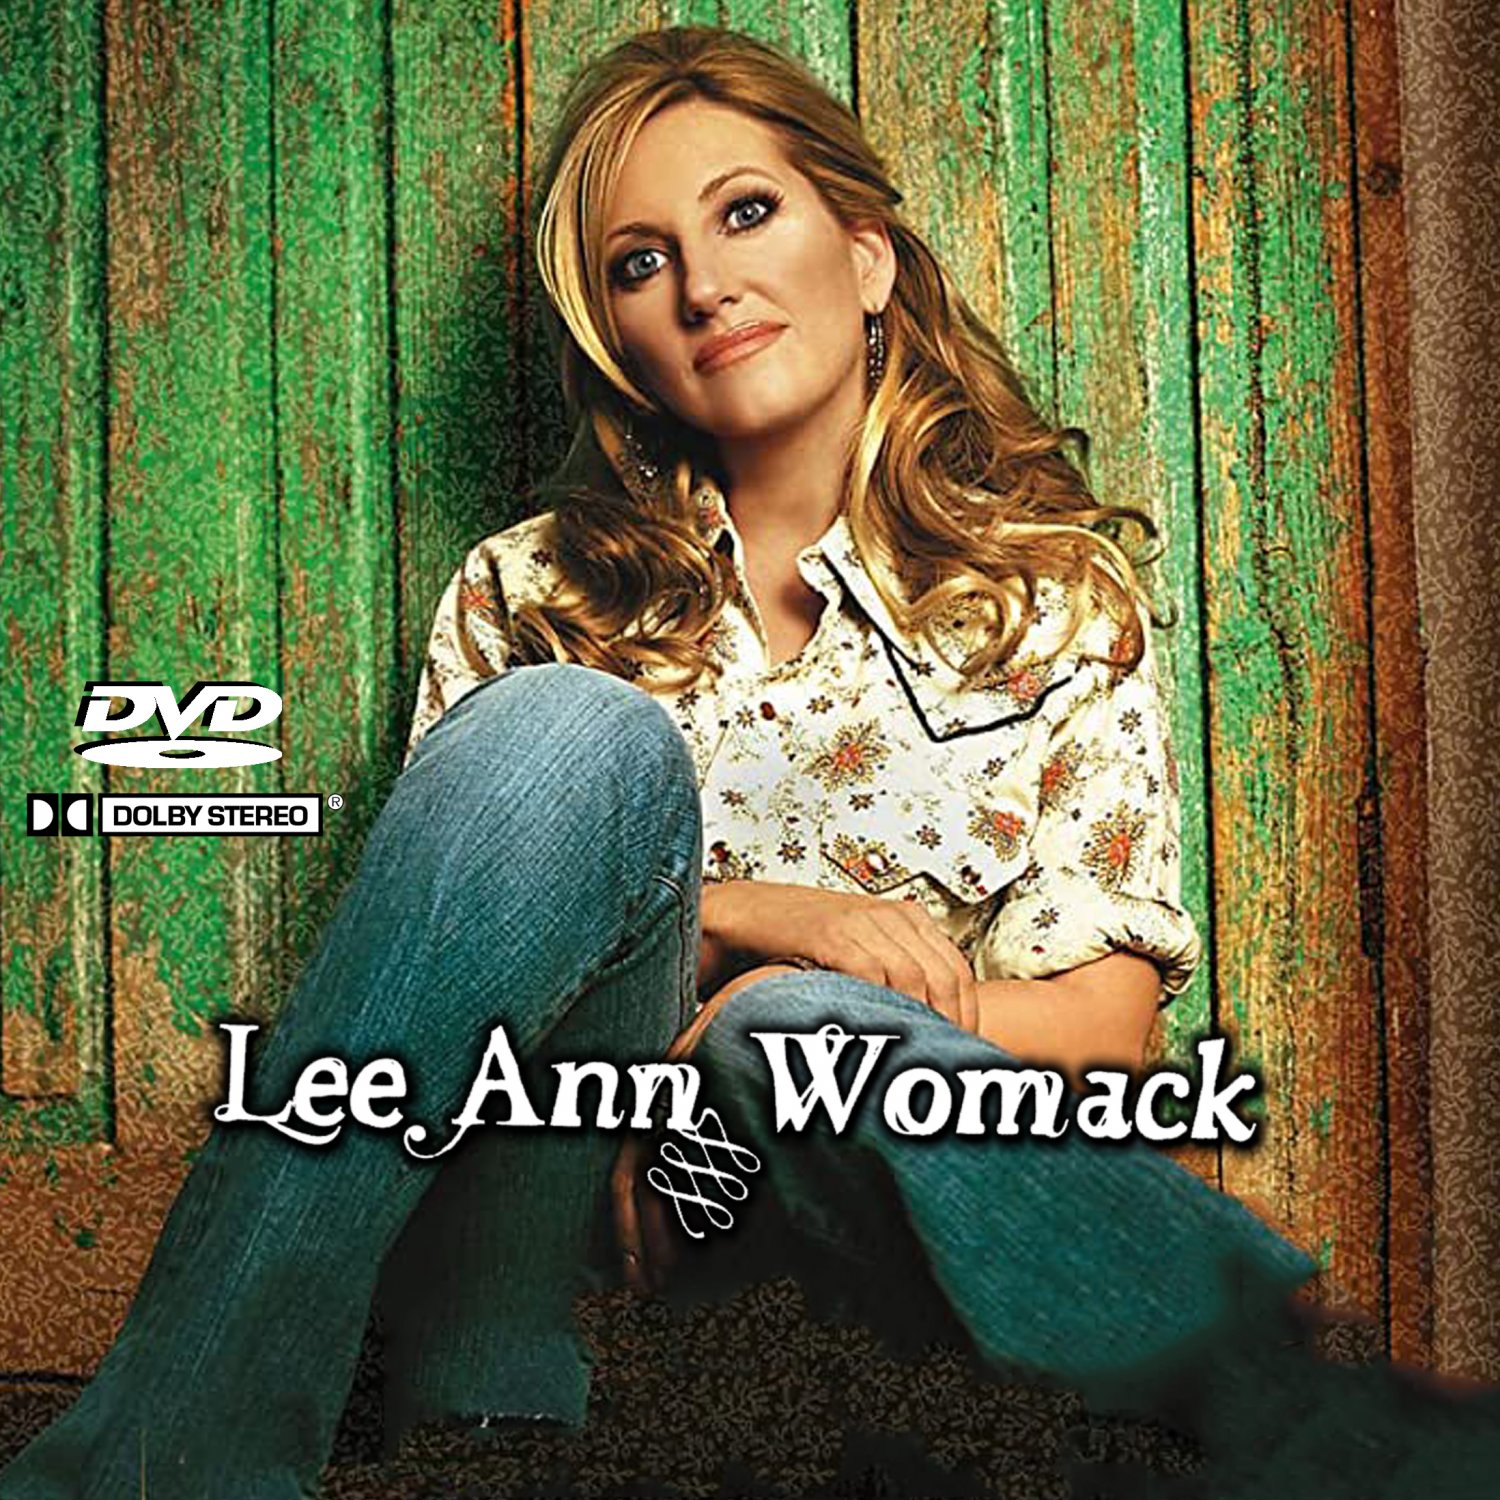 Lee Ann Womack Music Videos Collection (1 DVD) 20 Music Videos